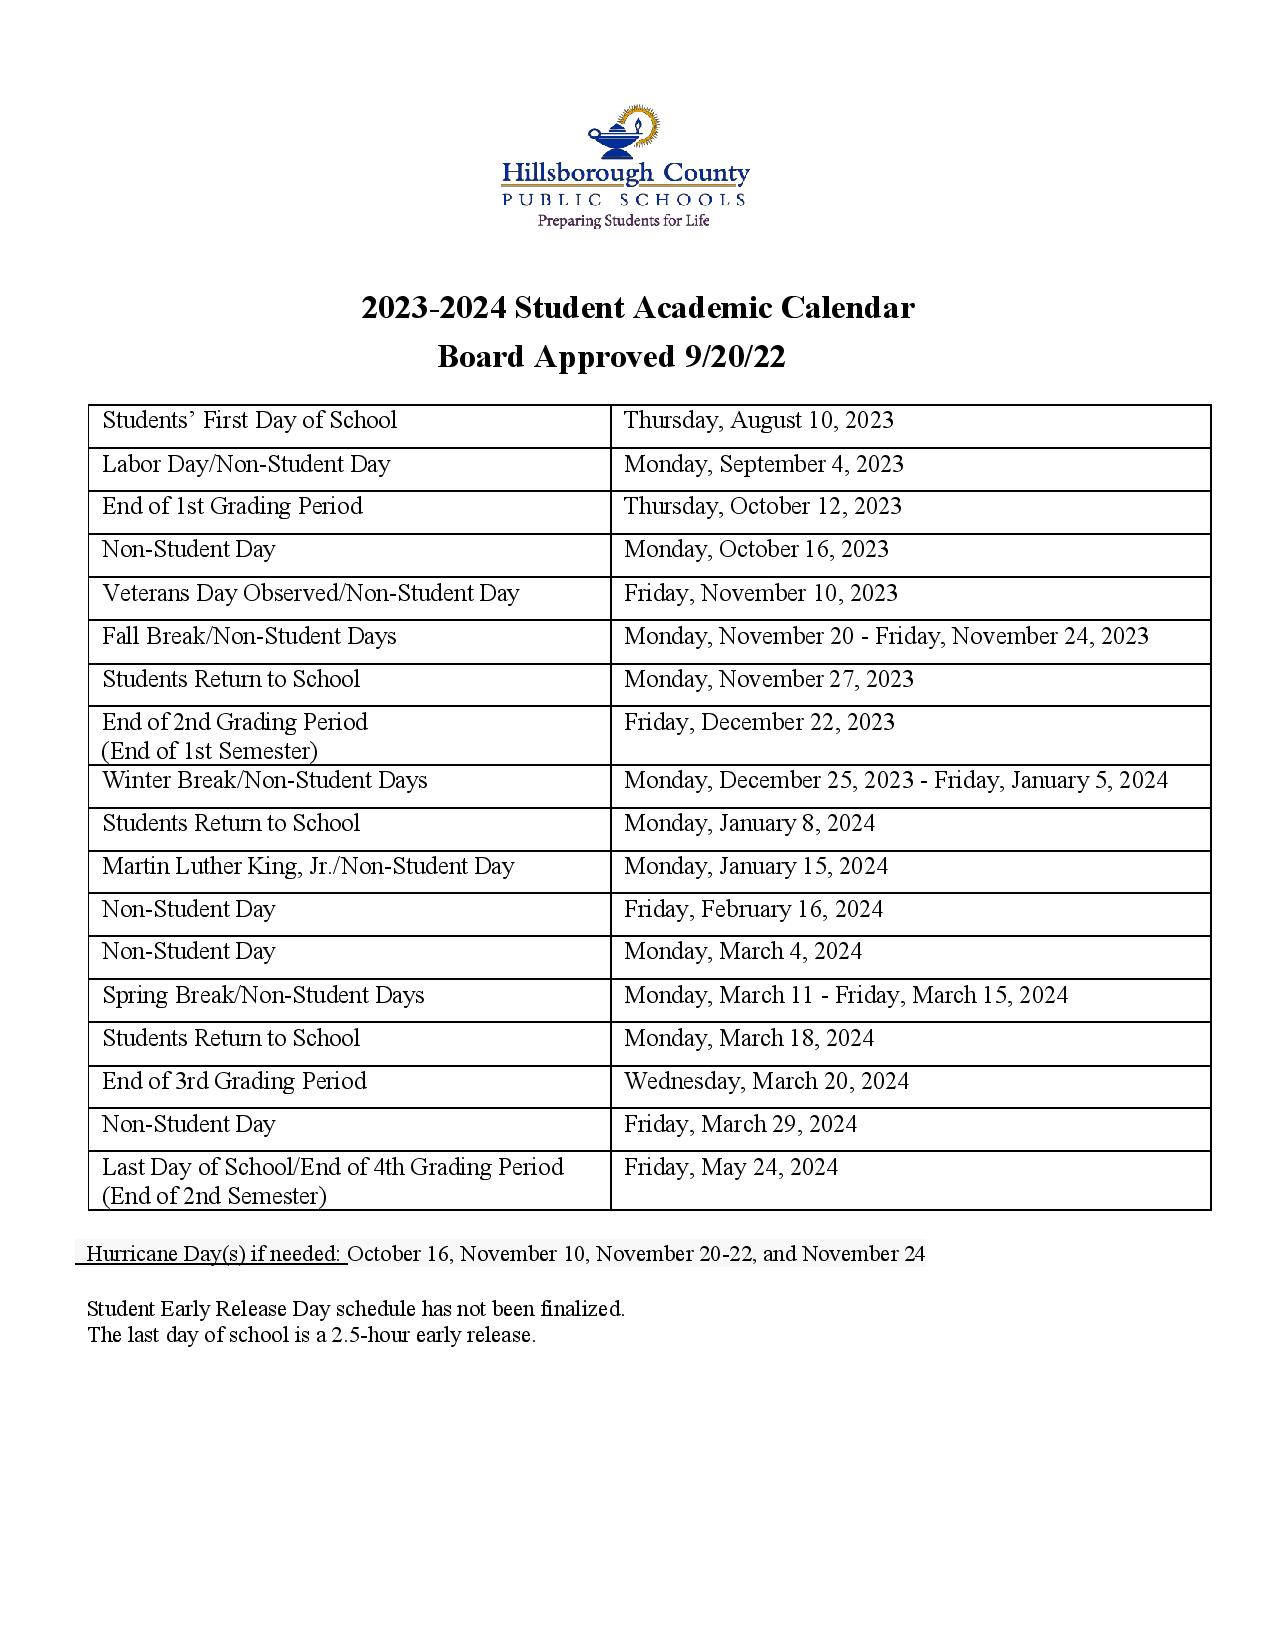 Hillsborough County Public Schools Calendar 